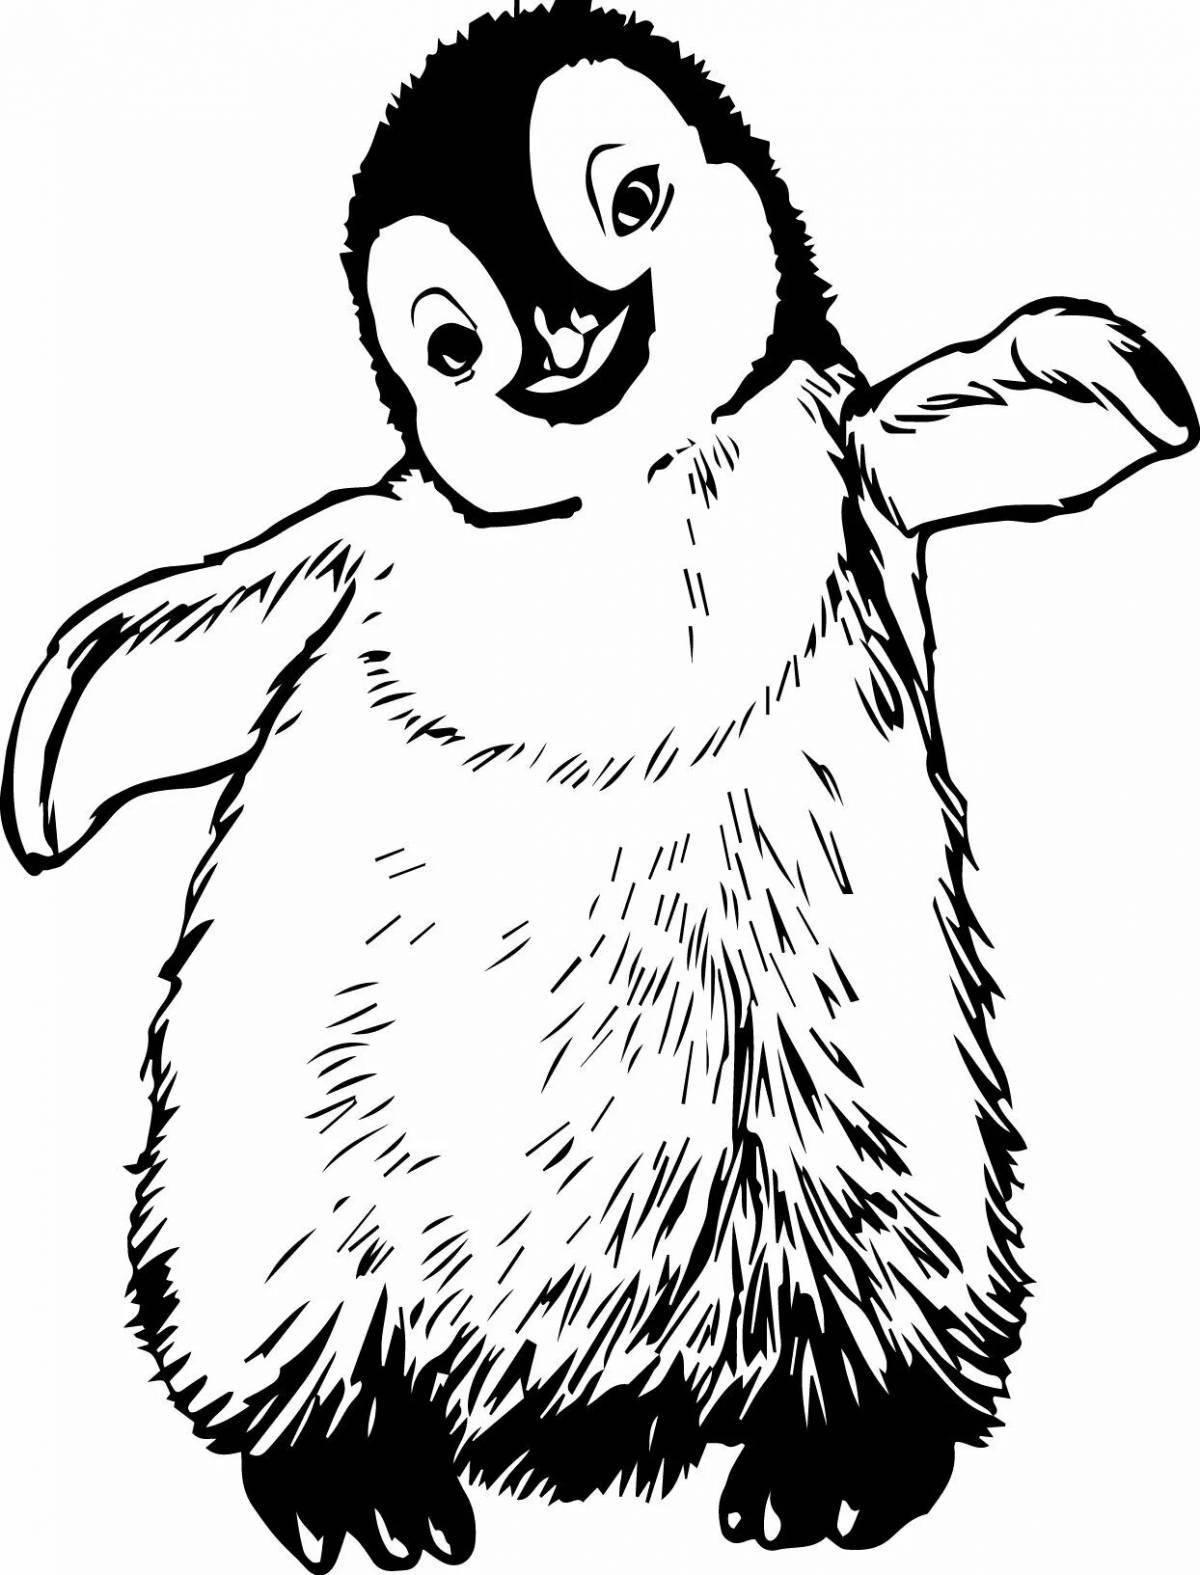 Penguin fun coloring book